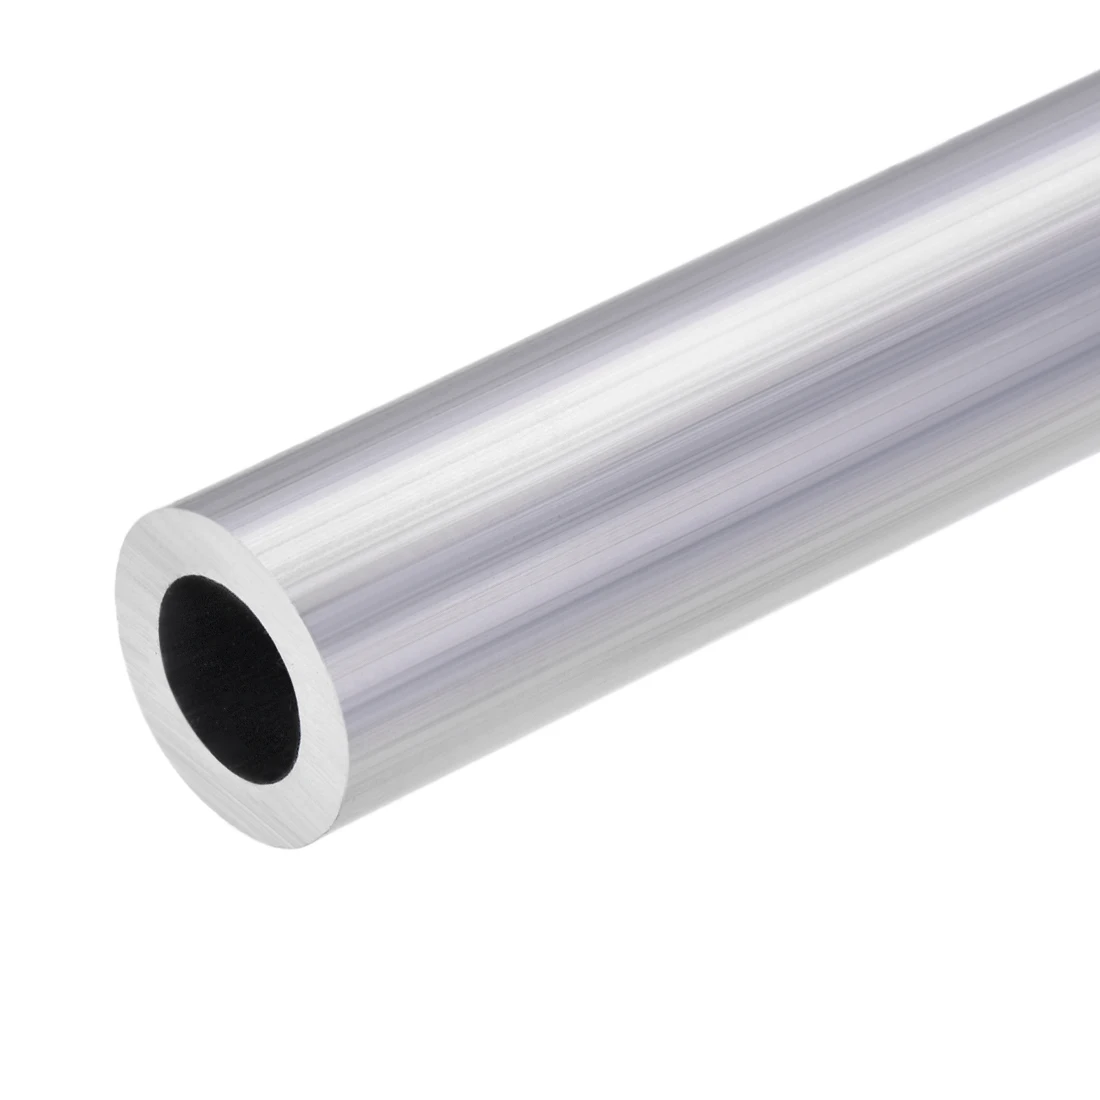 Tubo redondo de aluminio 6063 300mm longitud 19mm OD tubo interno de diámetro sin costuras 16mm 2Pcs 